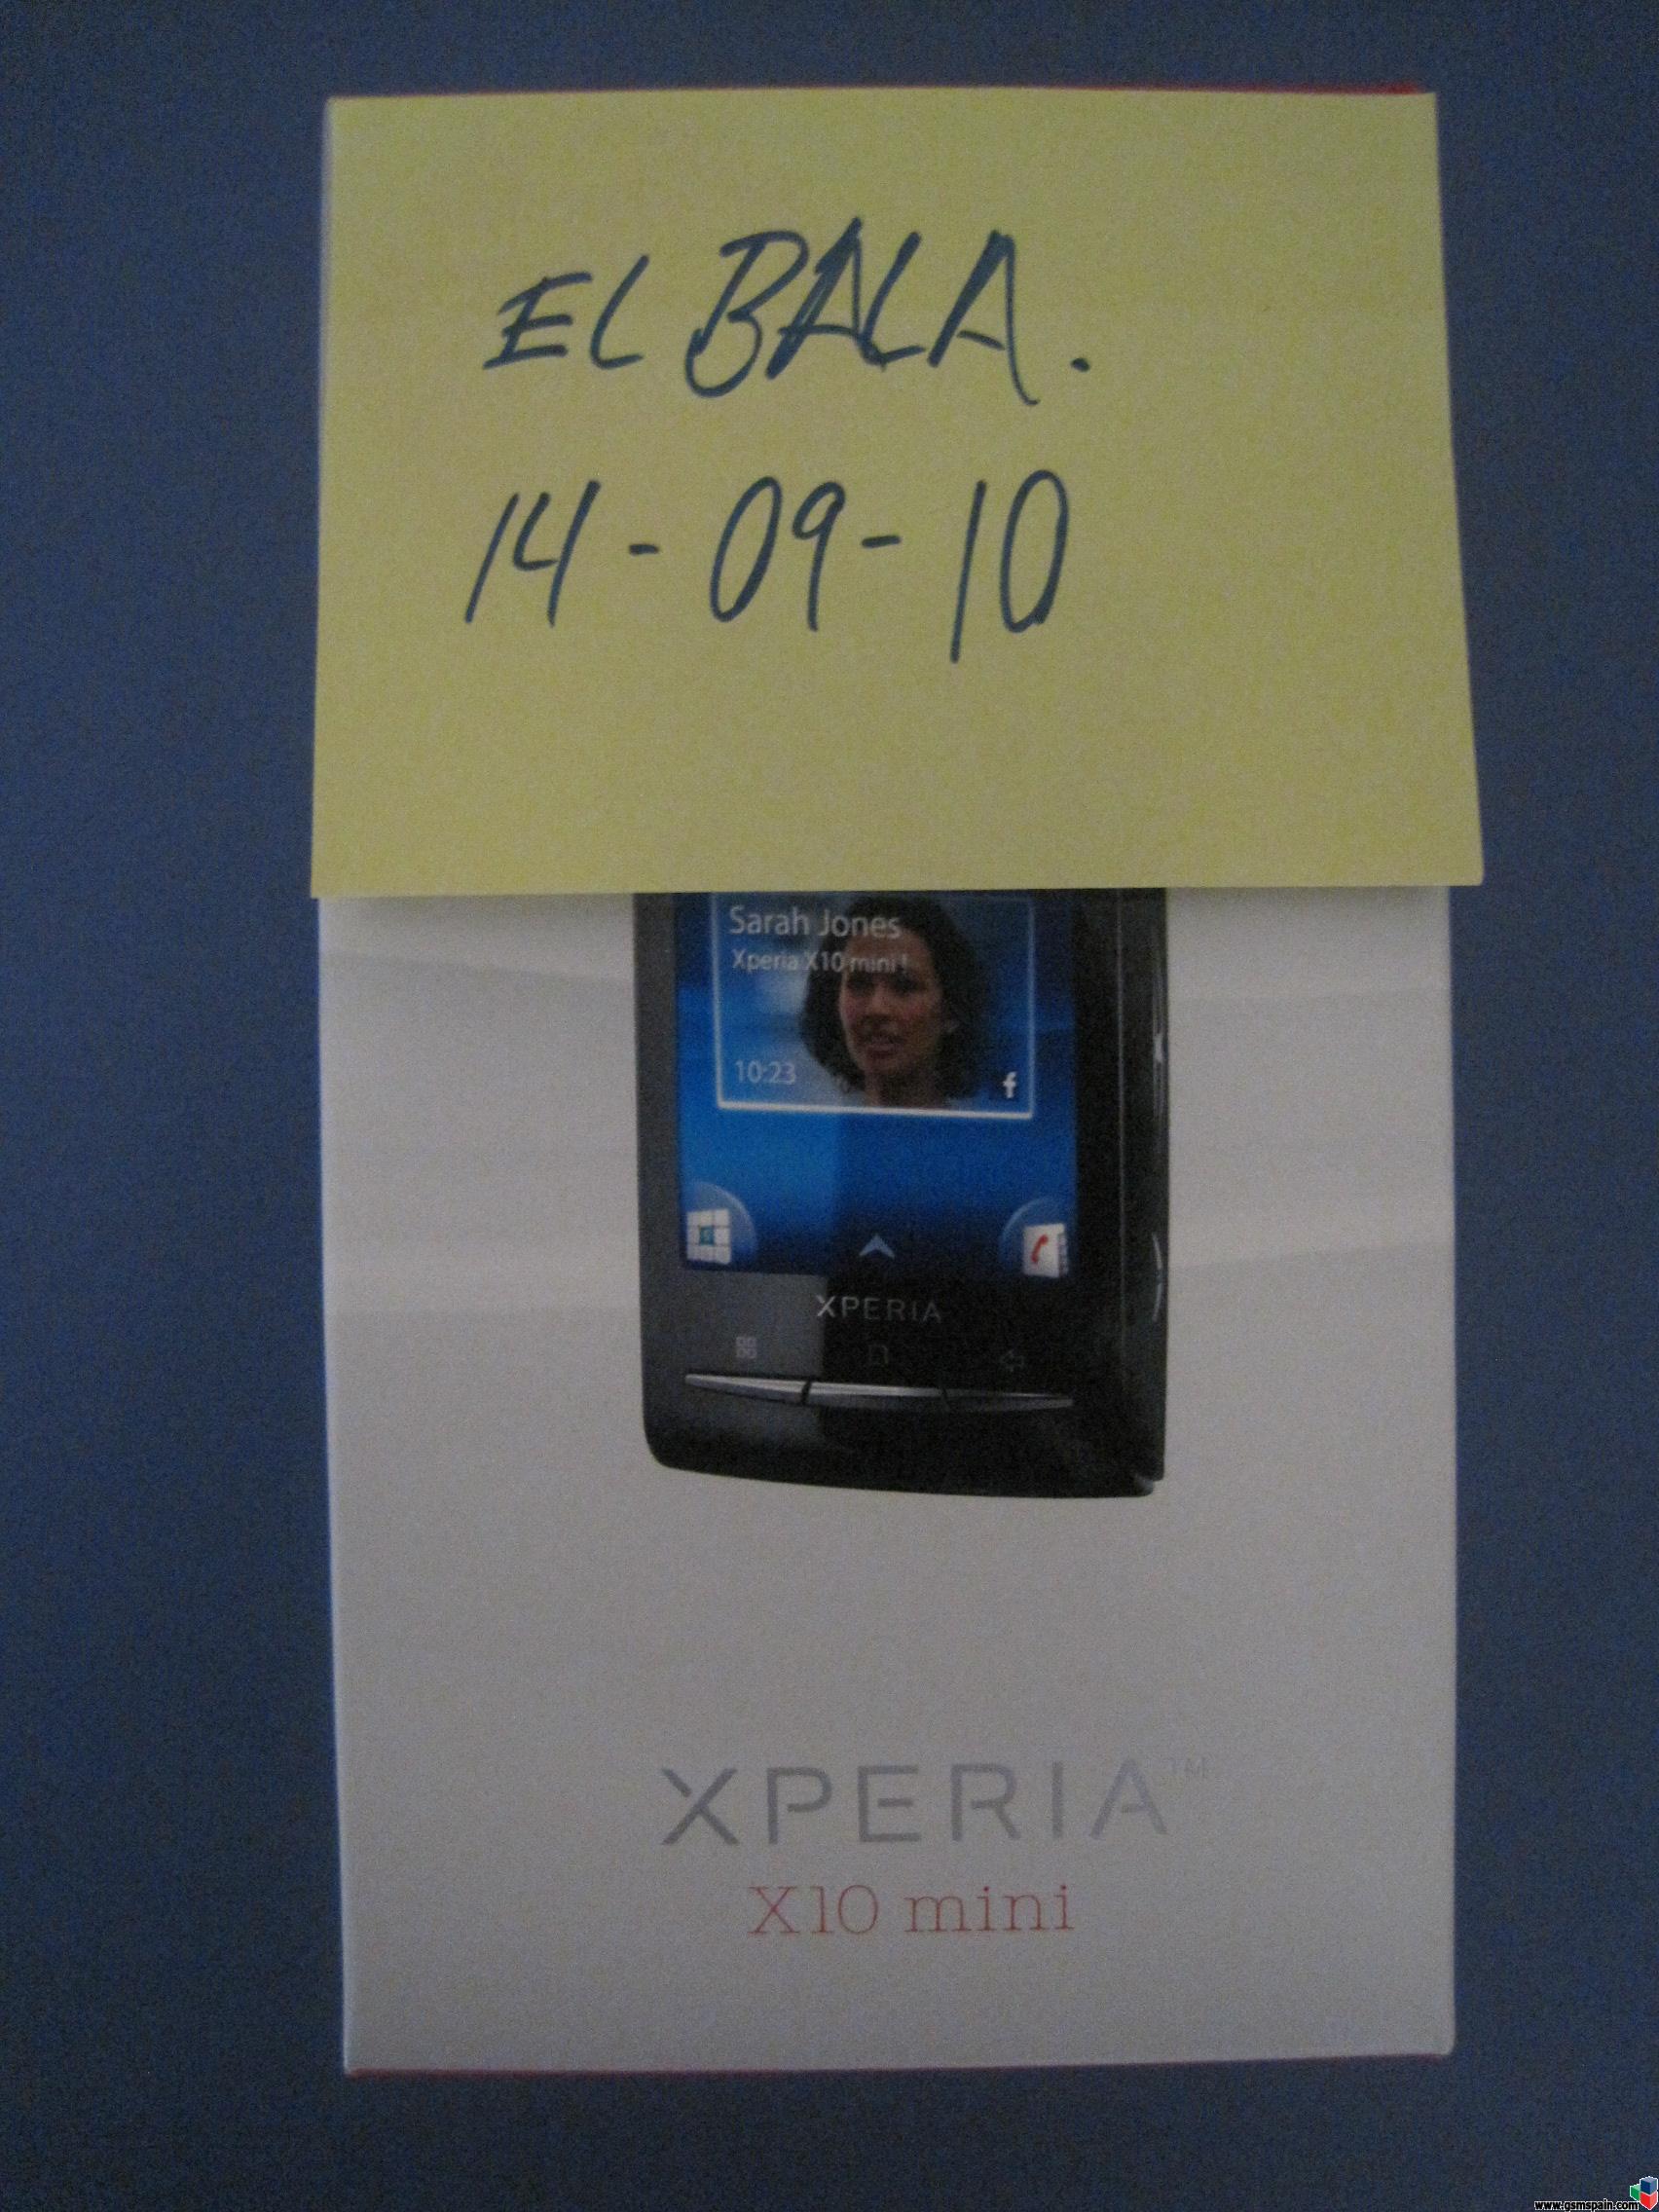 Sony Ericsson X10 Mini vodafone - precintado - factura - Envo 24h MRW includo- 145